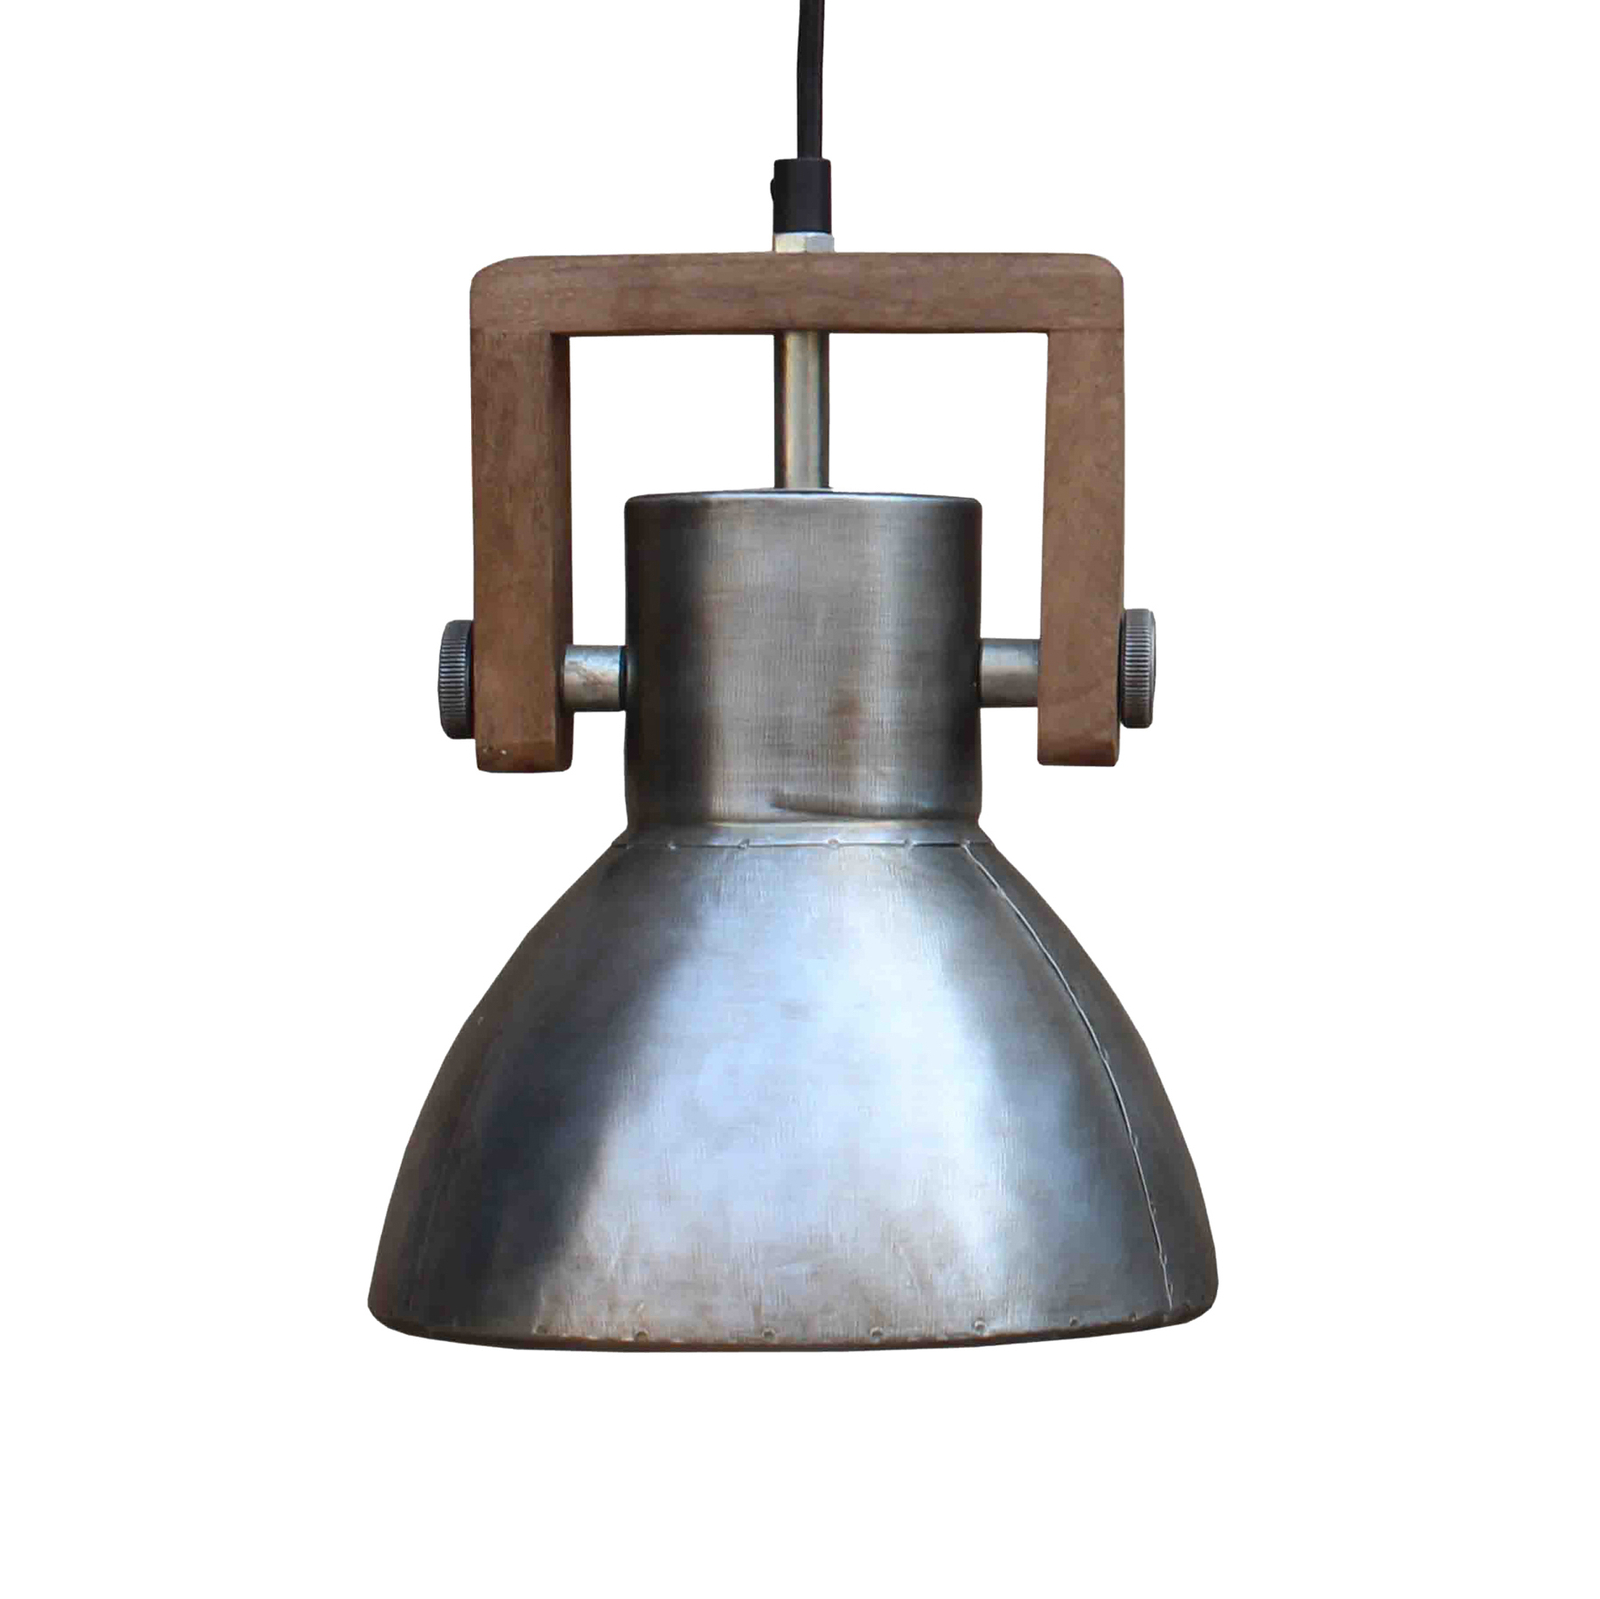 PR Home Ashby Single hanglamp Ø19cm zilver